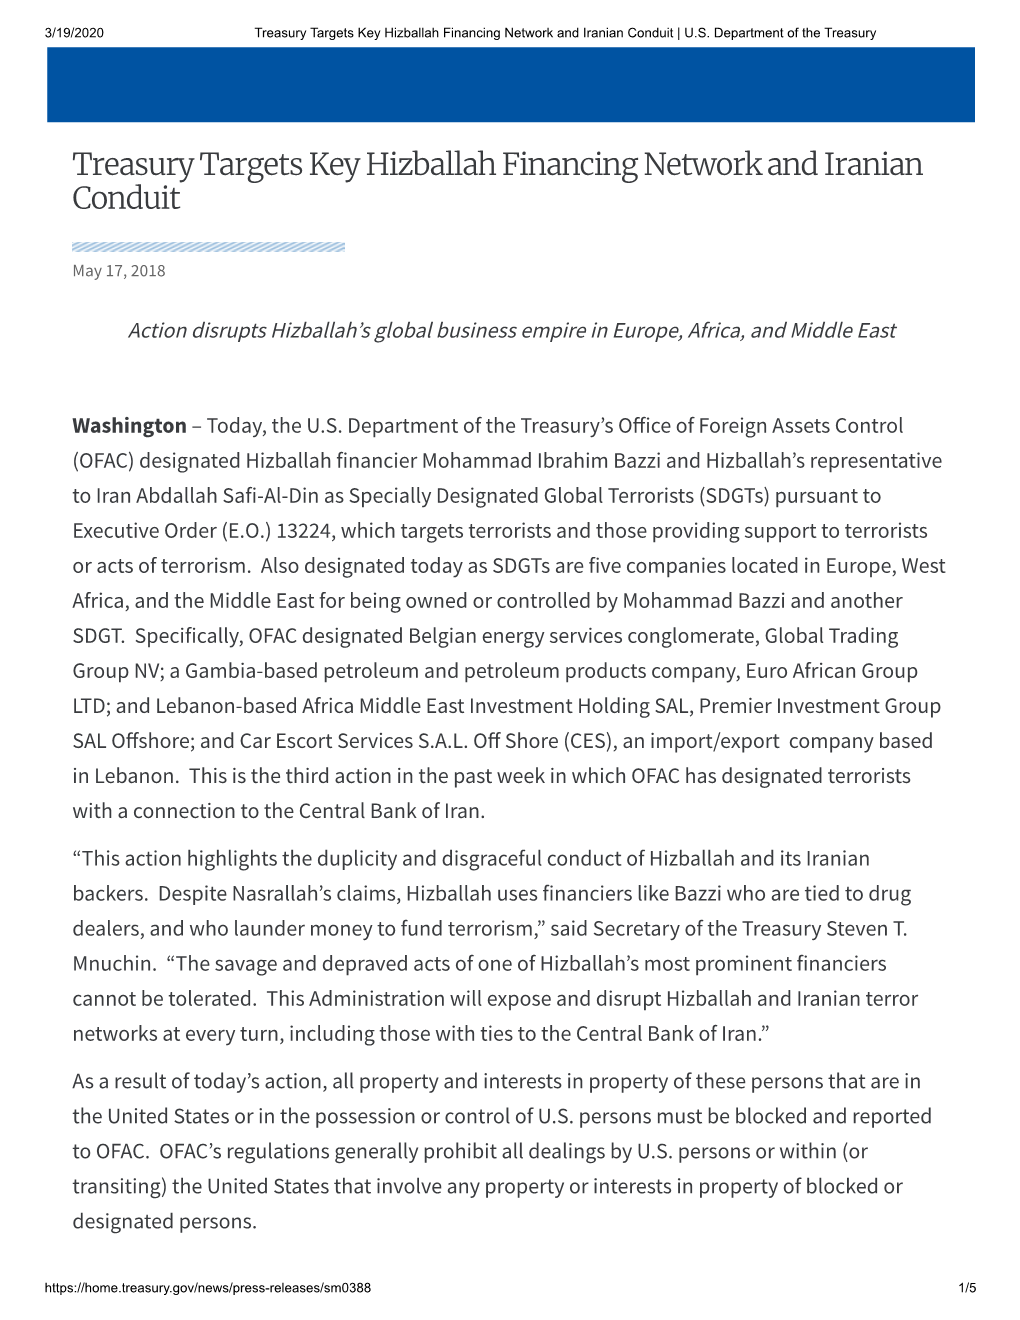 Treasury Targets Key Hizballah Financing Network and Iranian Conduit | U.S